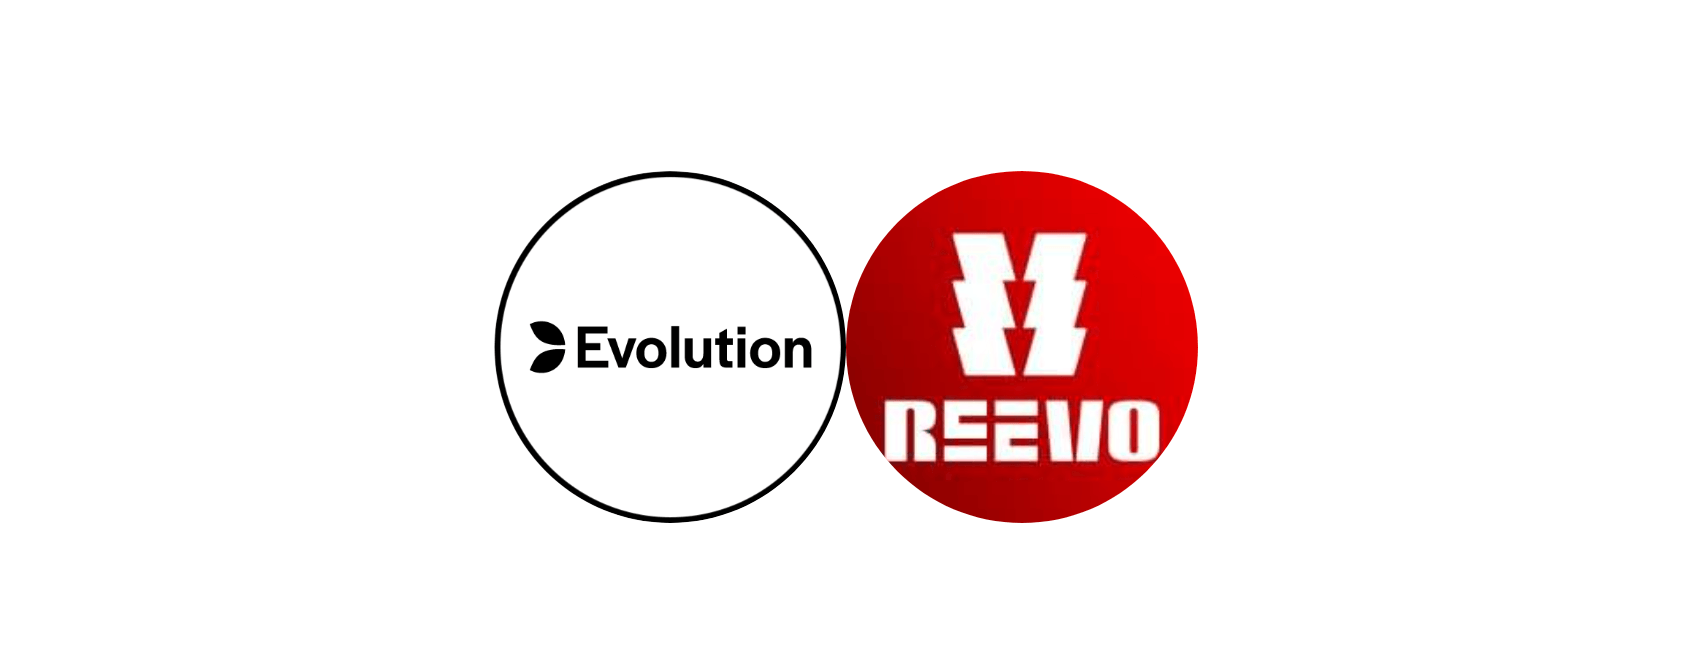 Evolution and Reevo team up